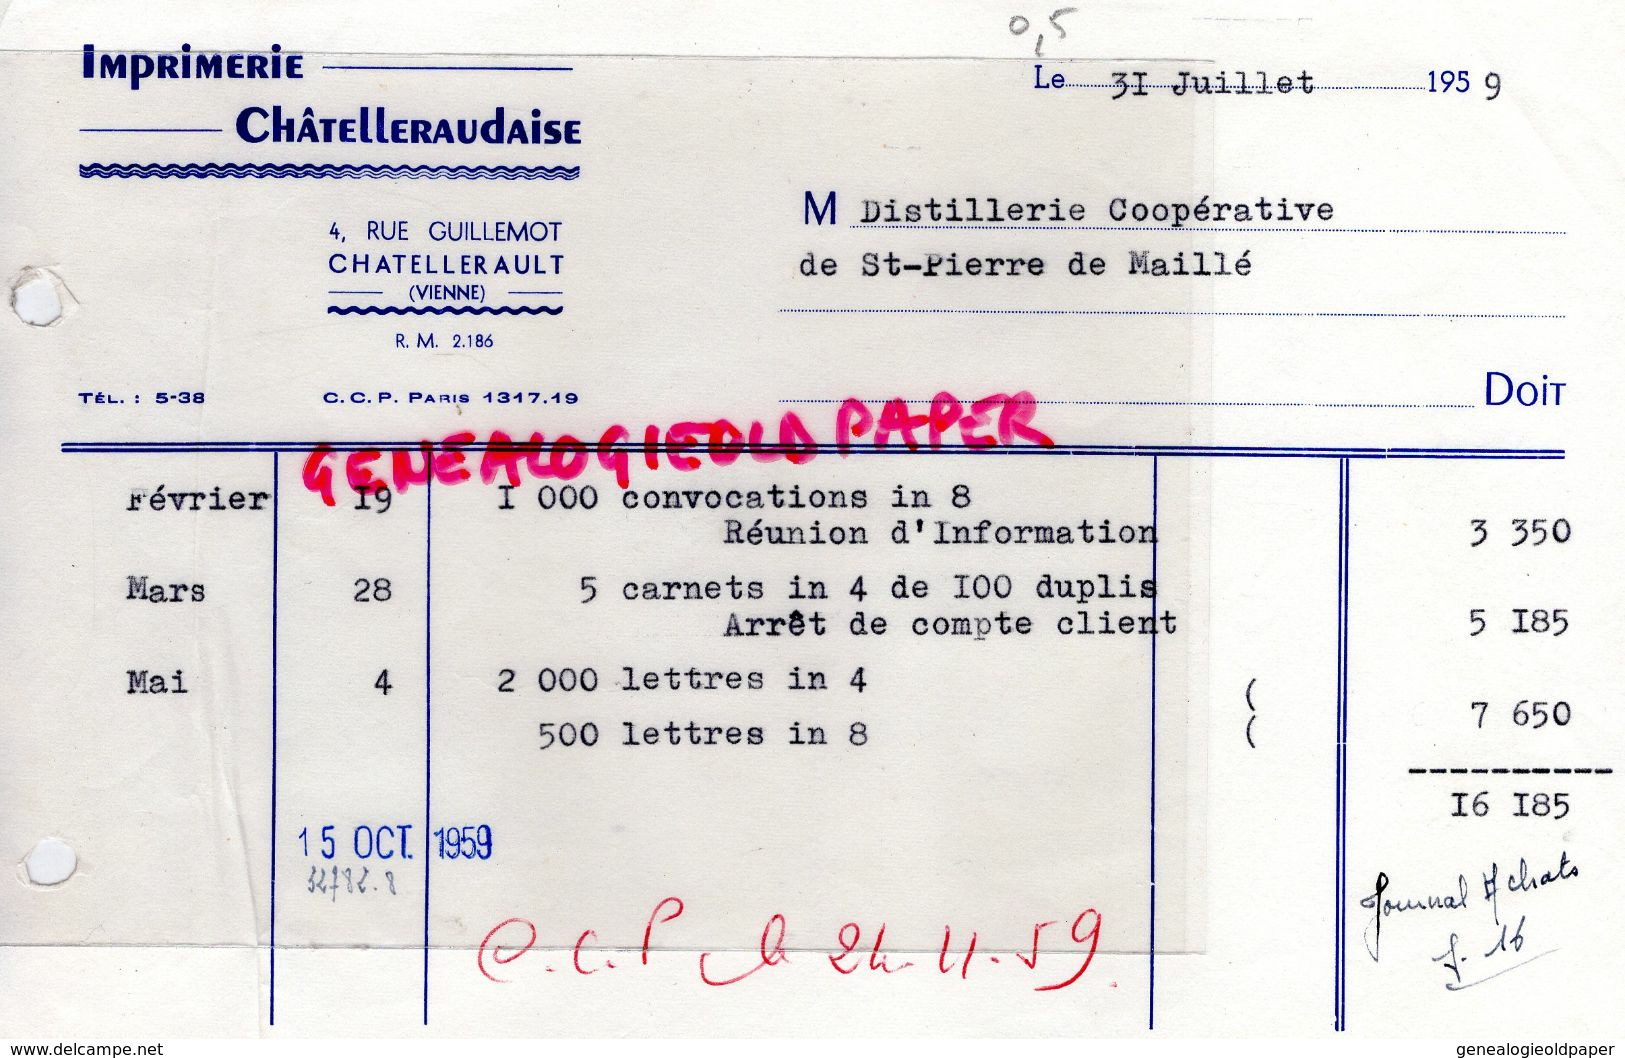 86- CHATELLERAULT- FACTURE IMPRIMERIE CHATELLERAUDAISE- 4 RUE GUILLEMINOT- 1959 - Printing & Stationeries